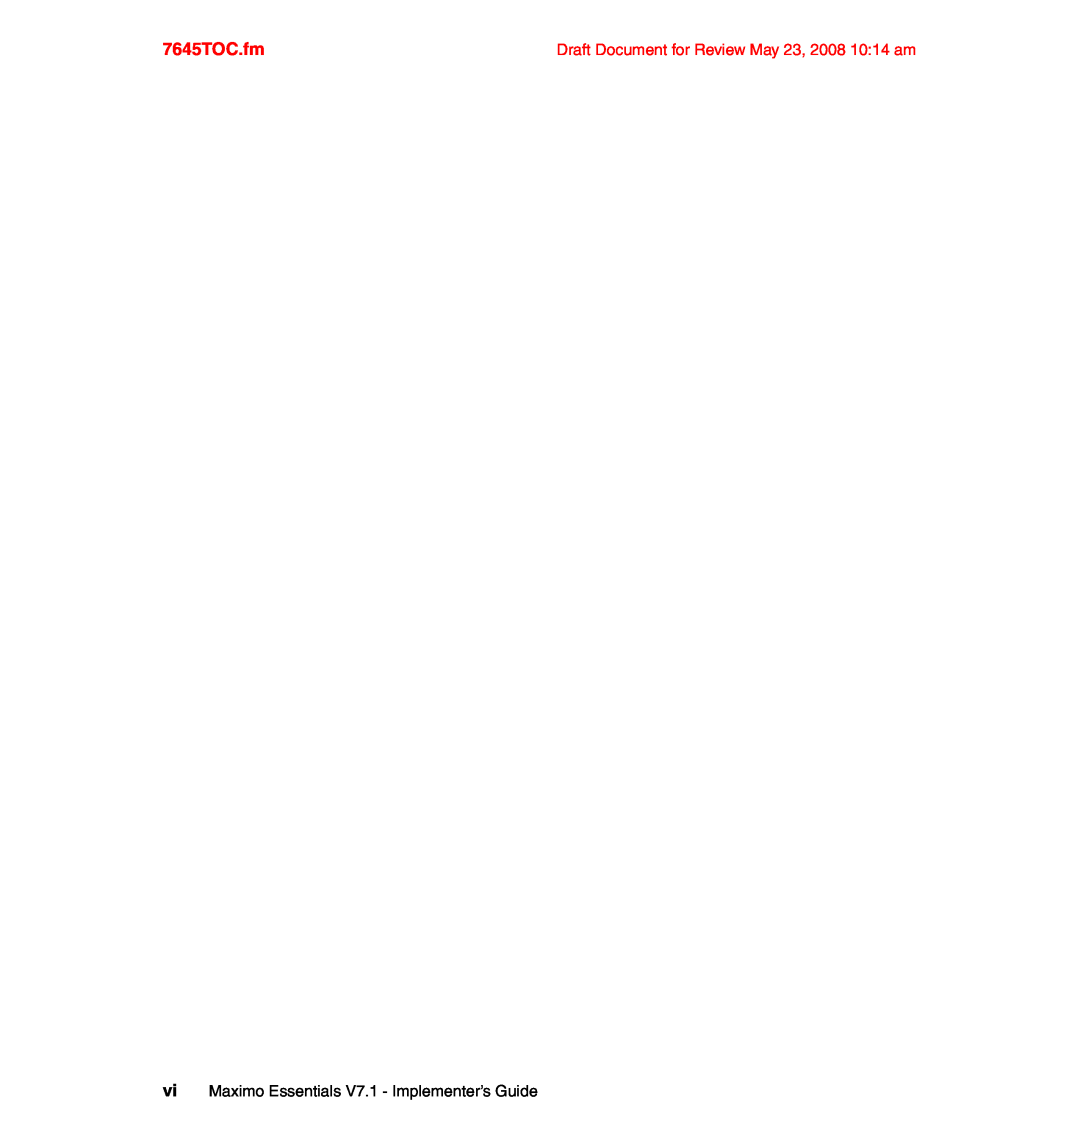 IBM SG24-7645-00 manual 7645TOC.fm, viMaximo Essentials V7.1 - Implementer’s Guide 